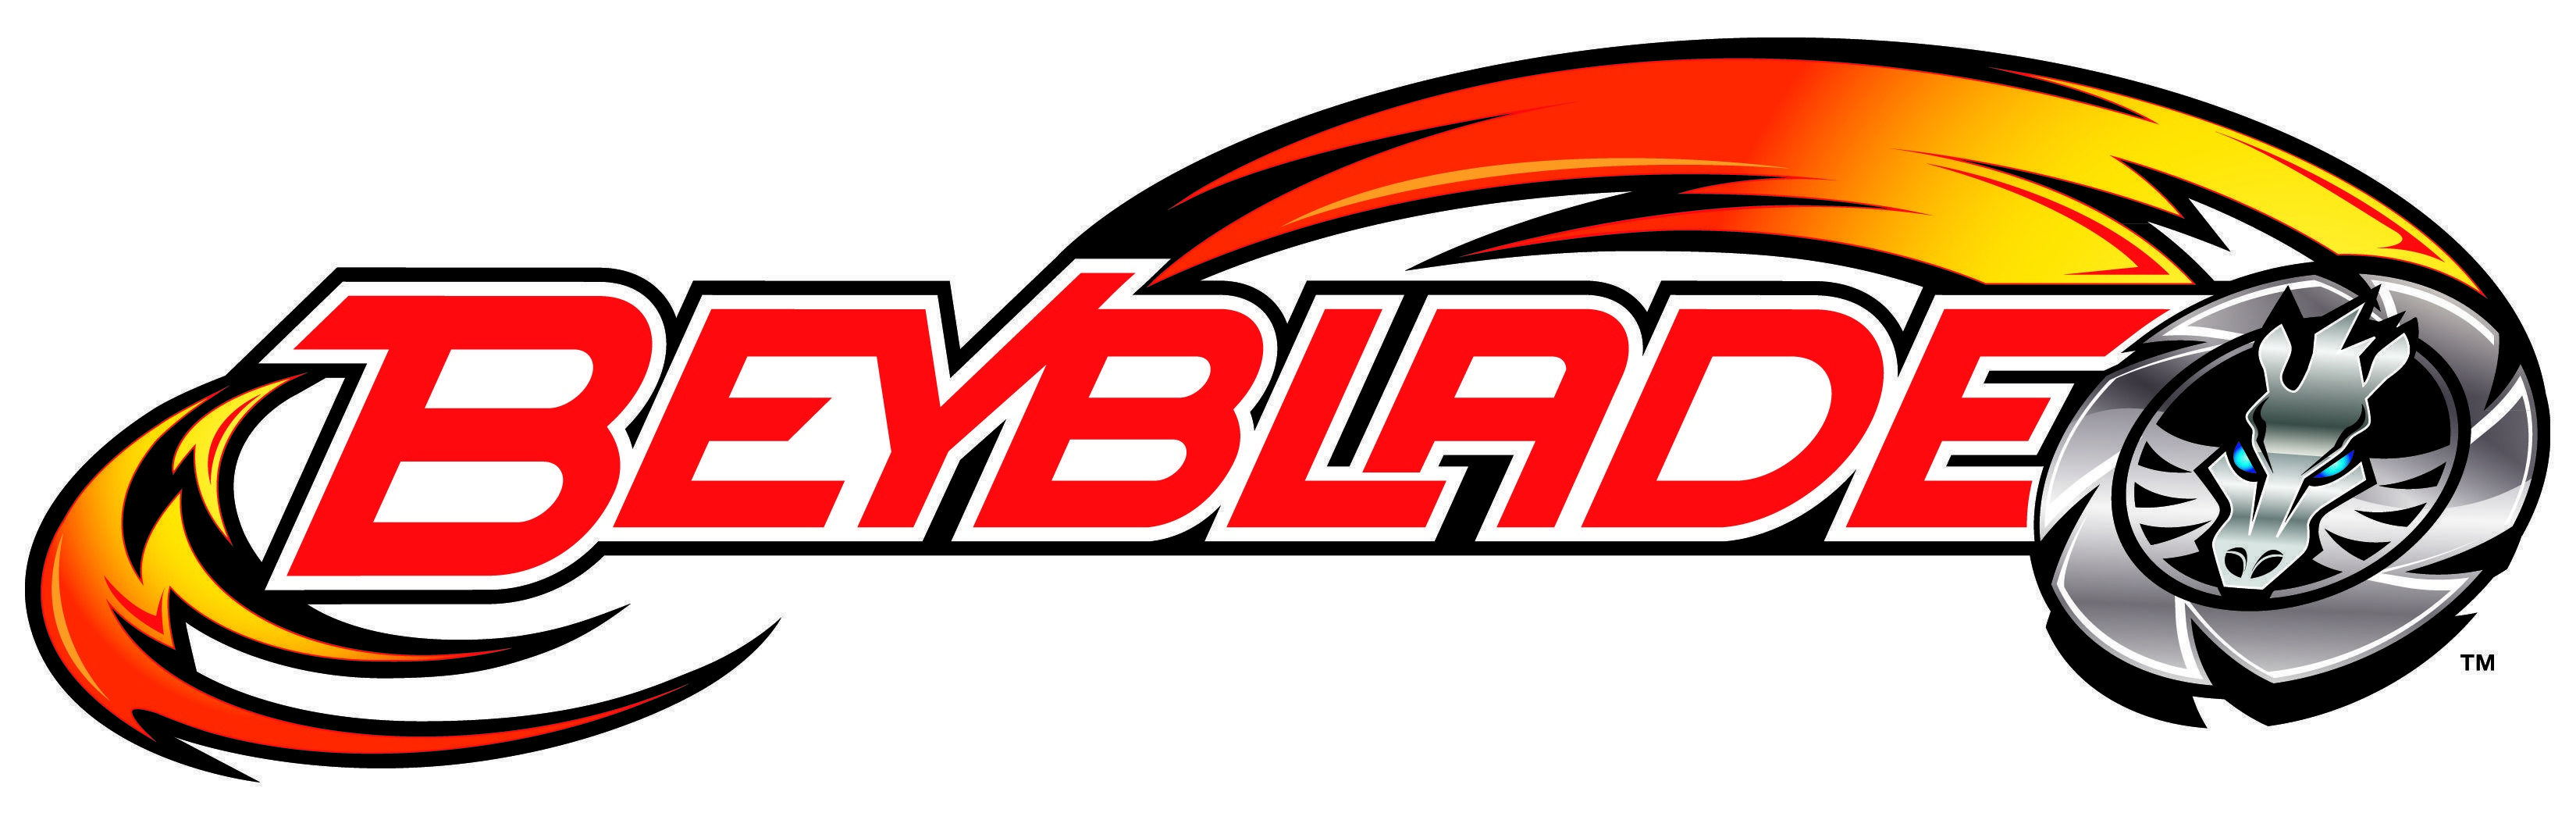 Beyblade Logo - beyblade logo. Cake Reference & Tutorials in 2019th birthday